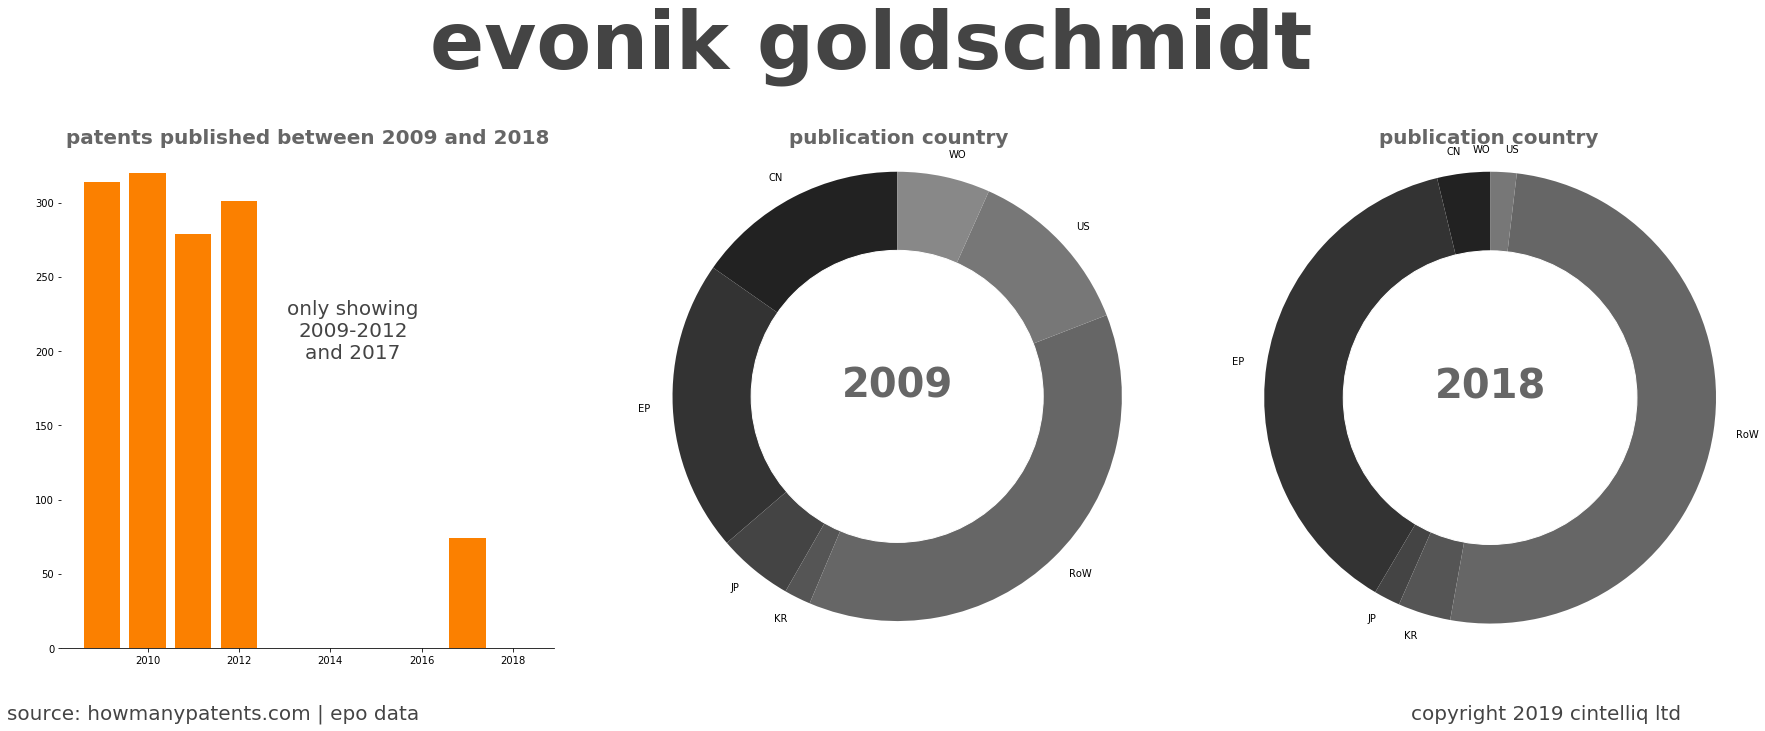 summary of patents for Evonik Goldschmidt